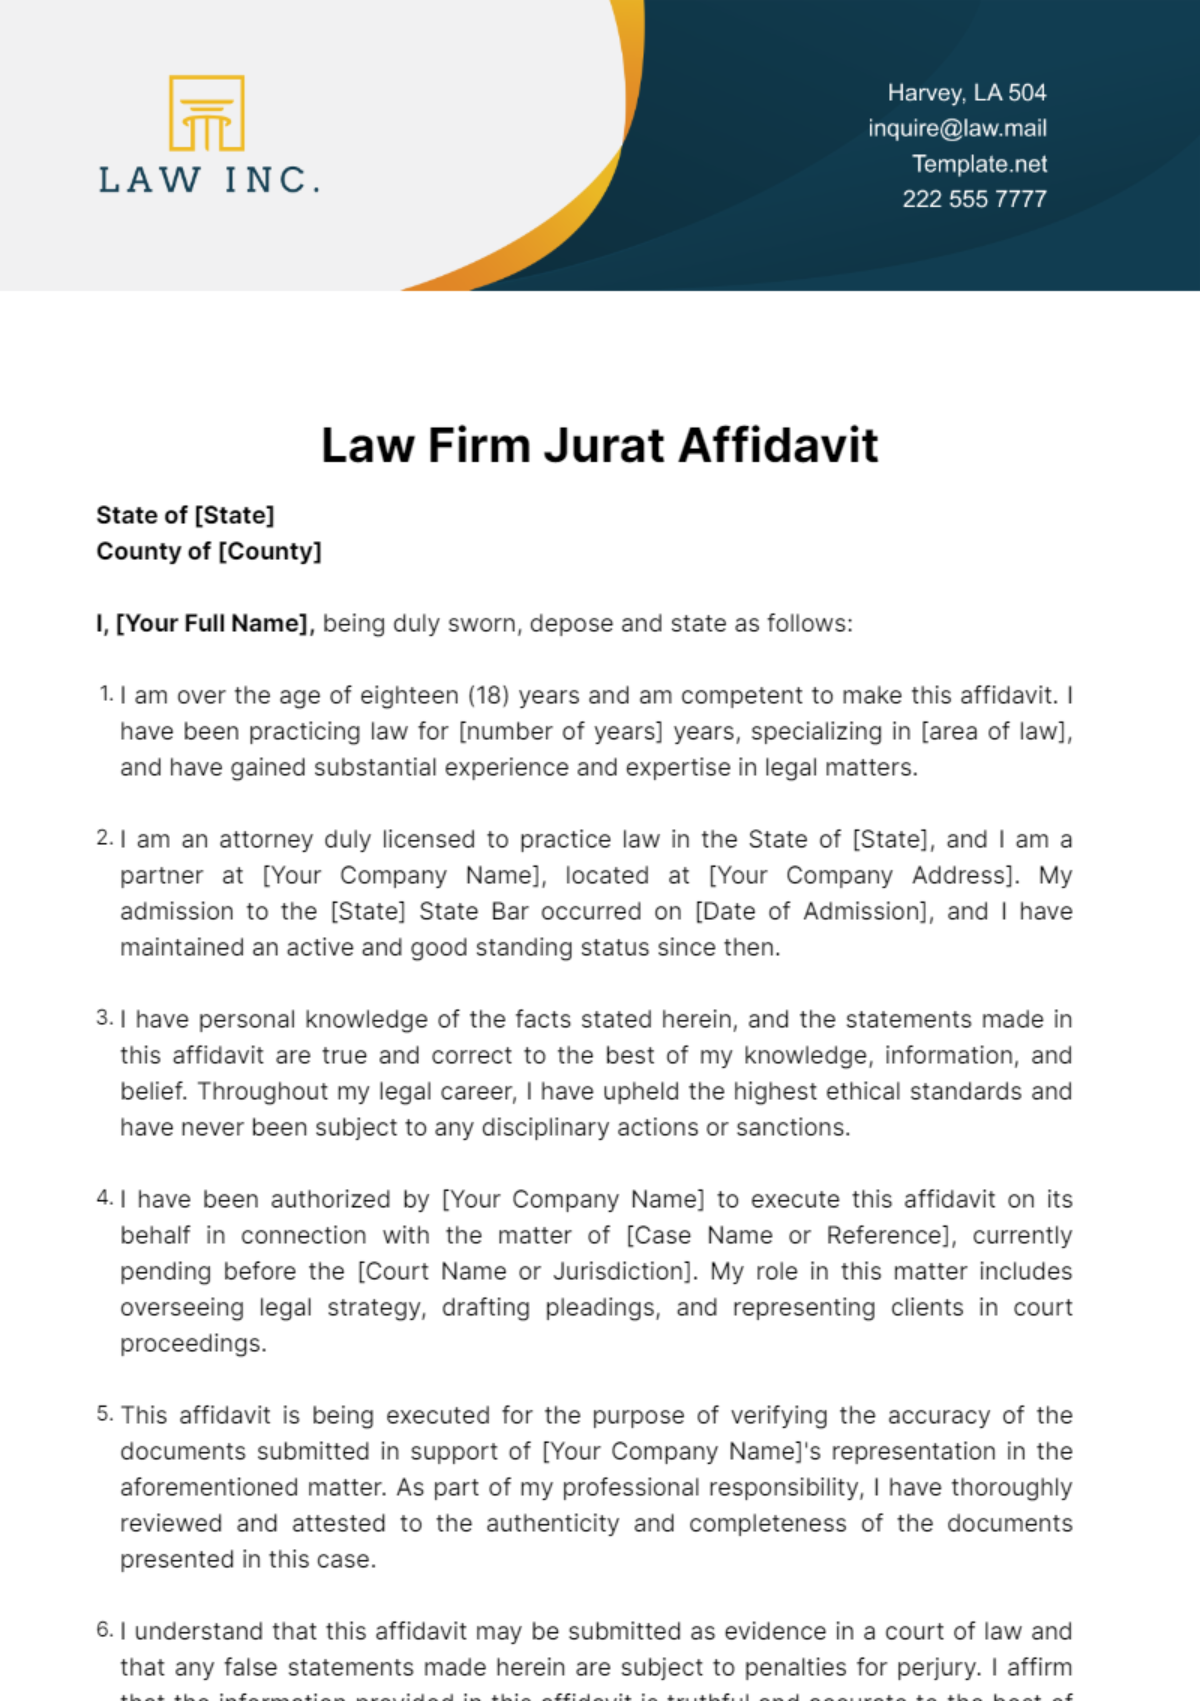 Law Firm Jurat Affidavit Template